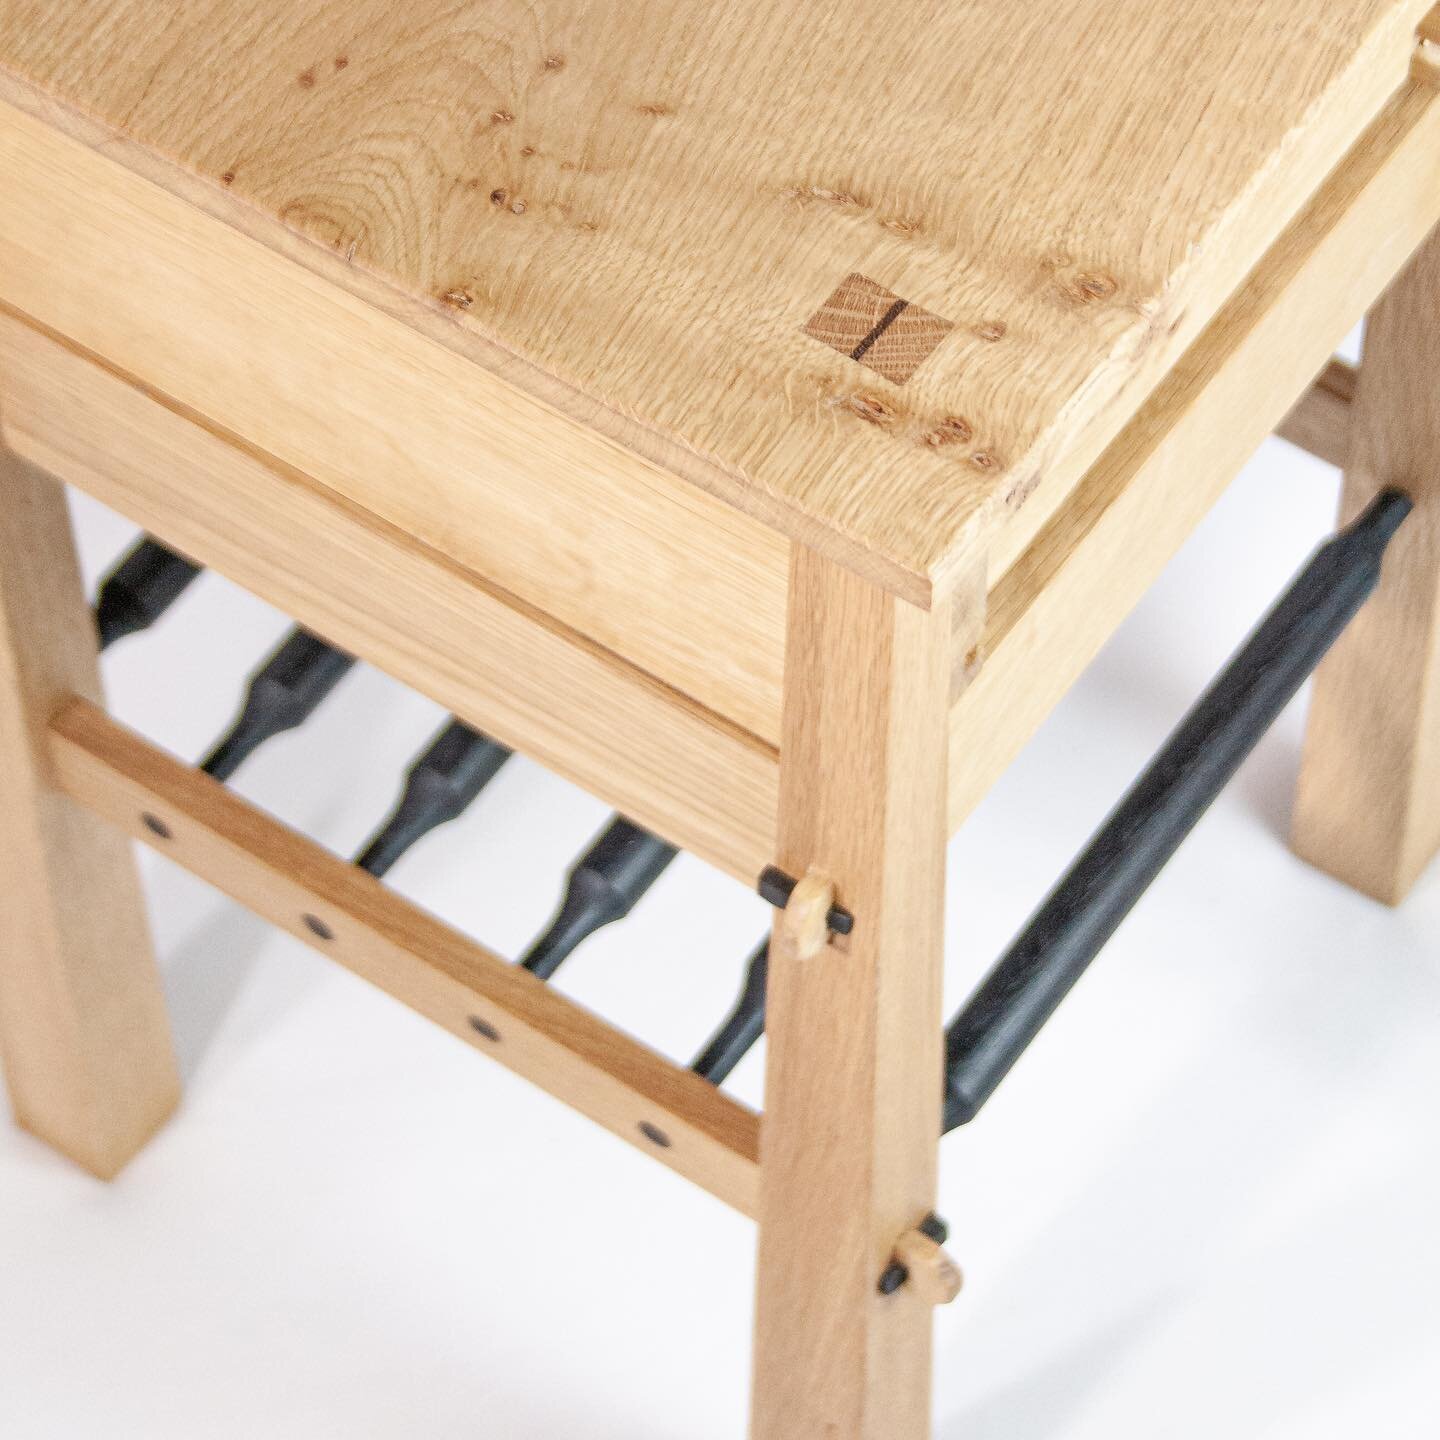 Joinery details from our custom bedside tables in oak 🛏

.
.
.
.
.
#furniture&nbsp;#furnituredetail&nbsp;#furnituredetails&nbsp;#furnituredesign&nbsp;#cosyhome&nbsp;#bedsidetable